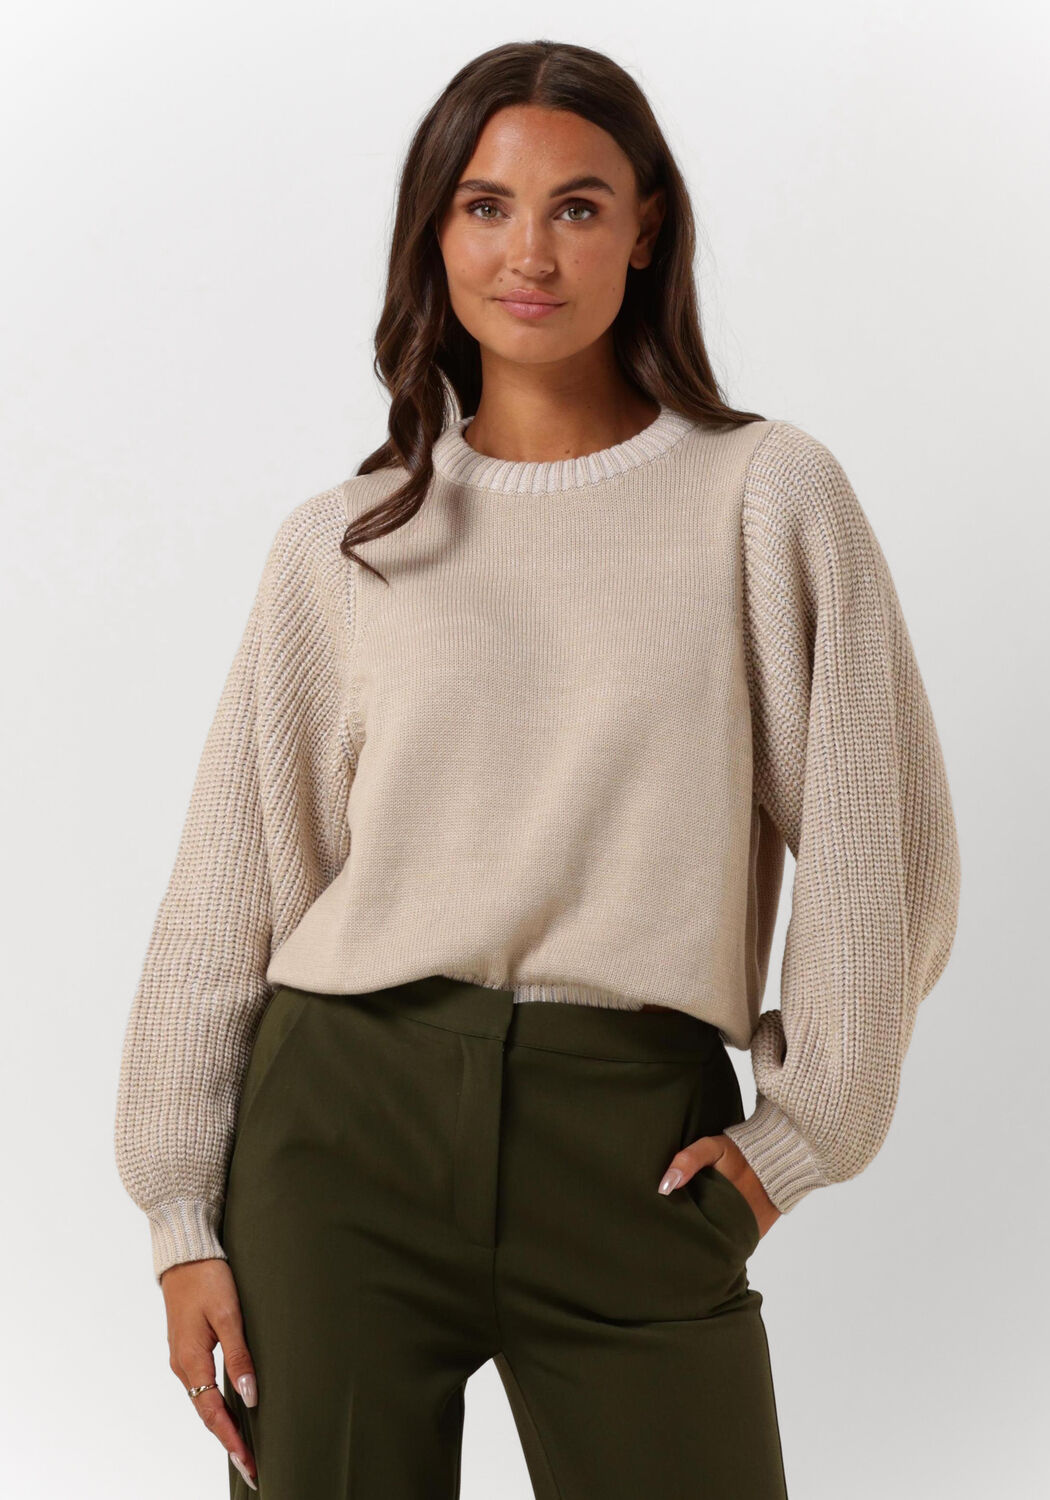 Rabatt 69 % DAMEN Pullovers & Sweatshirts Pullover Elegant Beige M Zara Pullover 